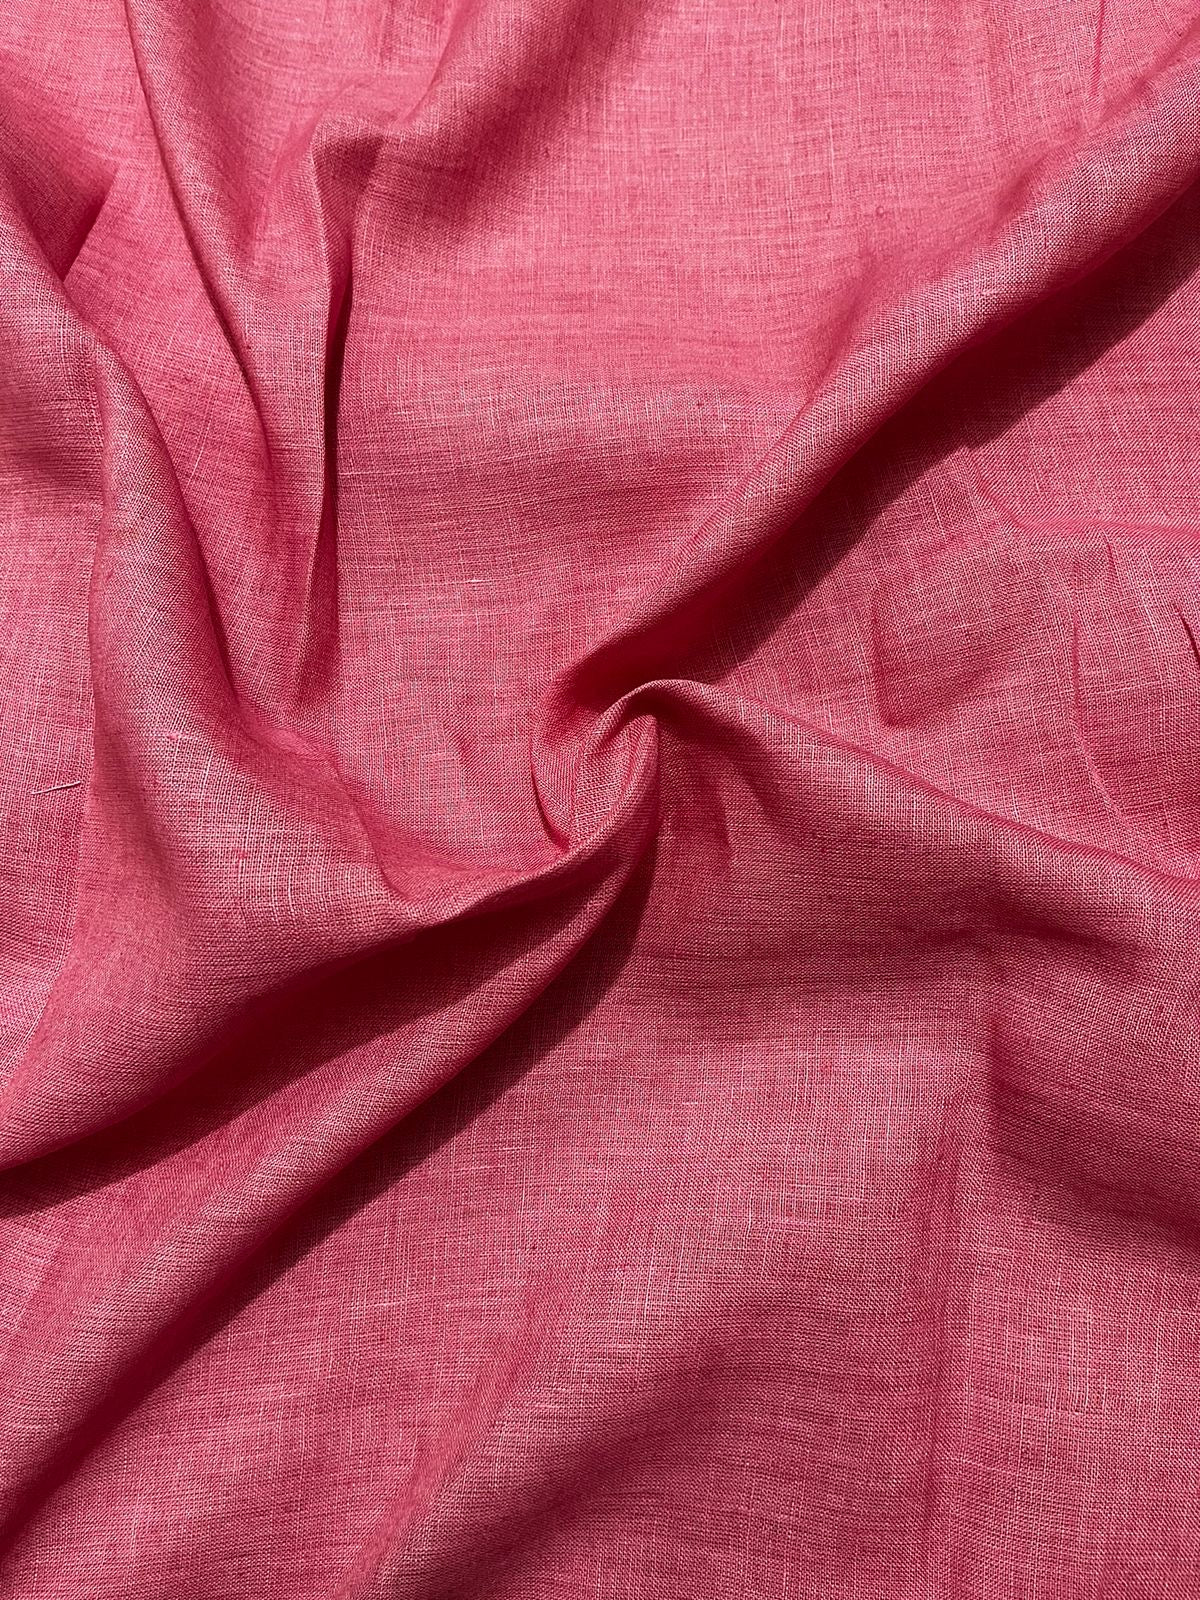 40 lea 58 inch 100% pure Handloom Linen Fabric -Pink Shade